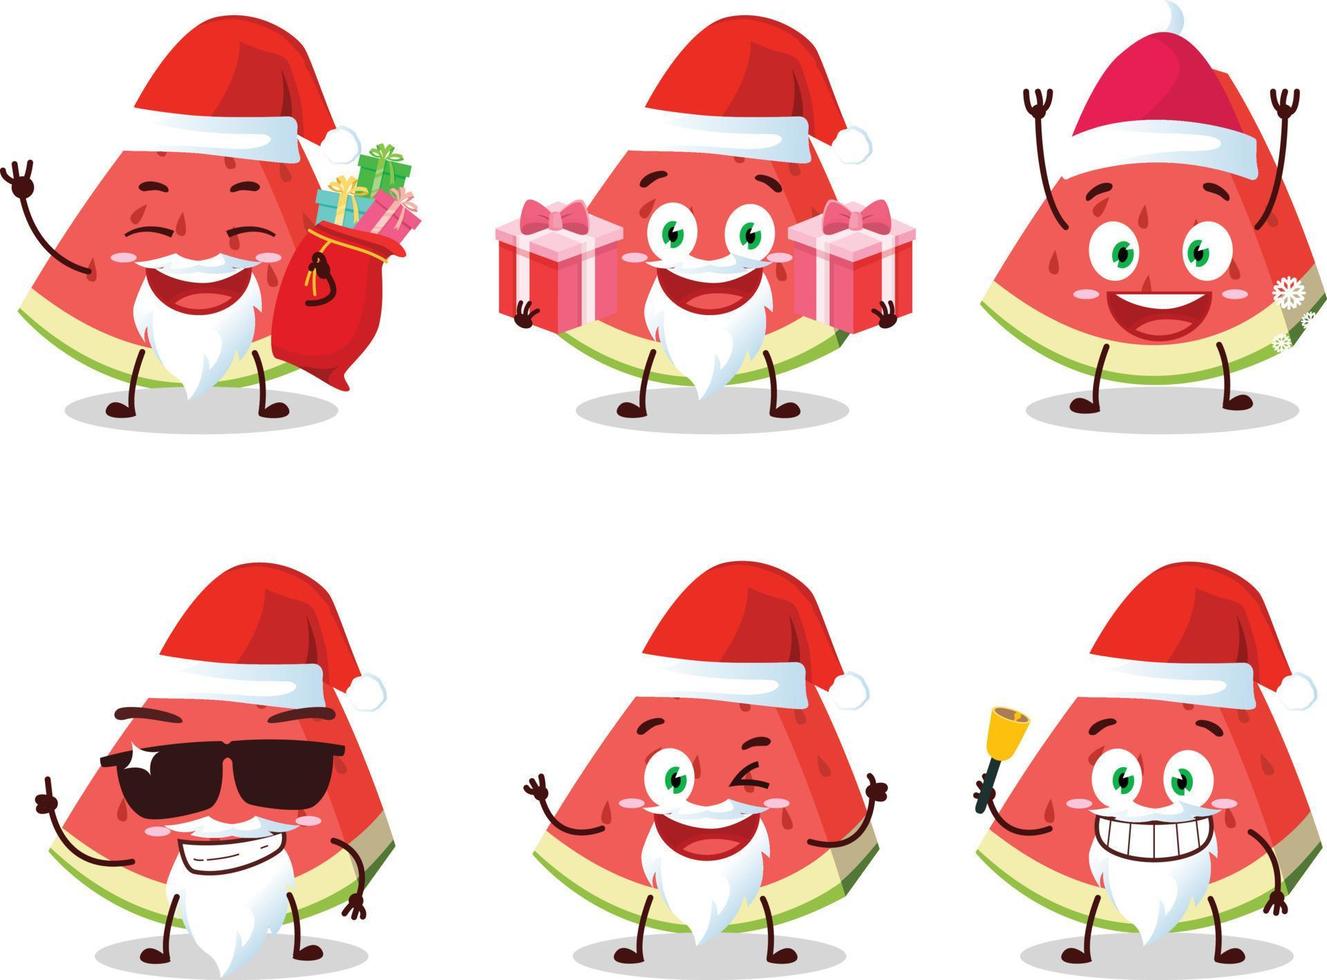 Santa Claus emoticons with slash of watermelon cartoon character vector